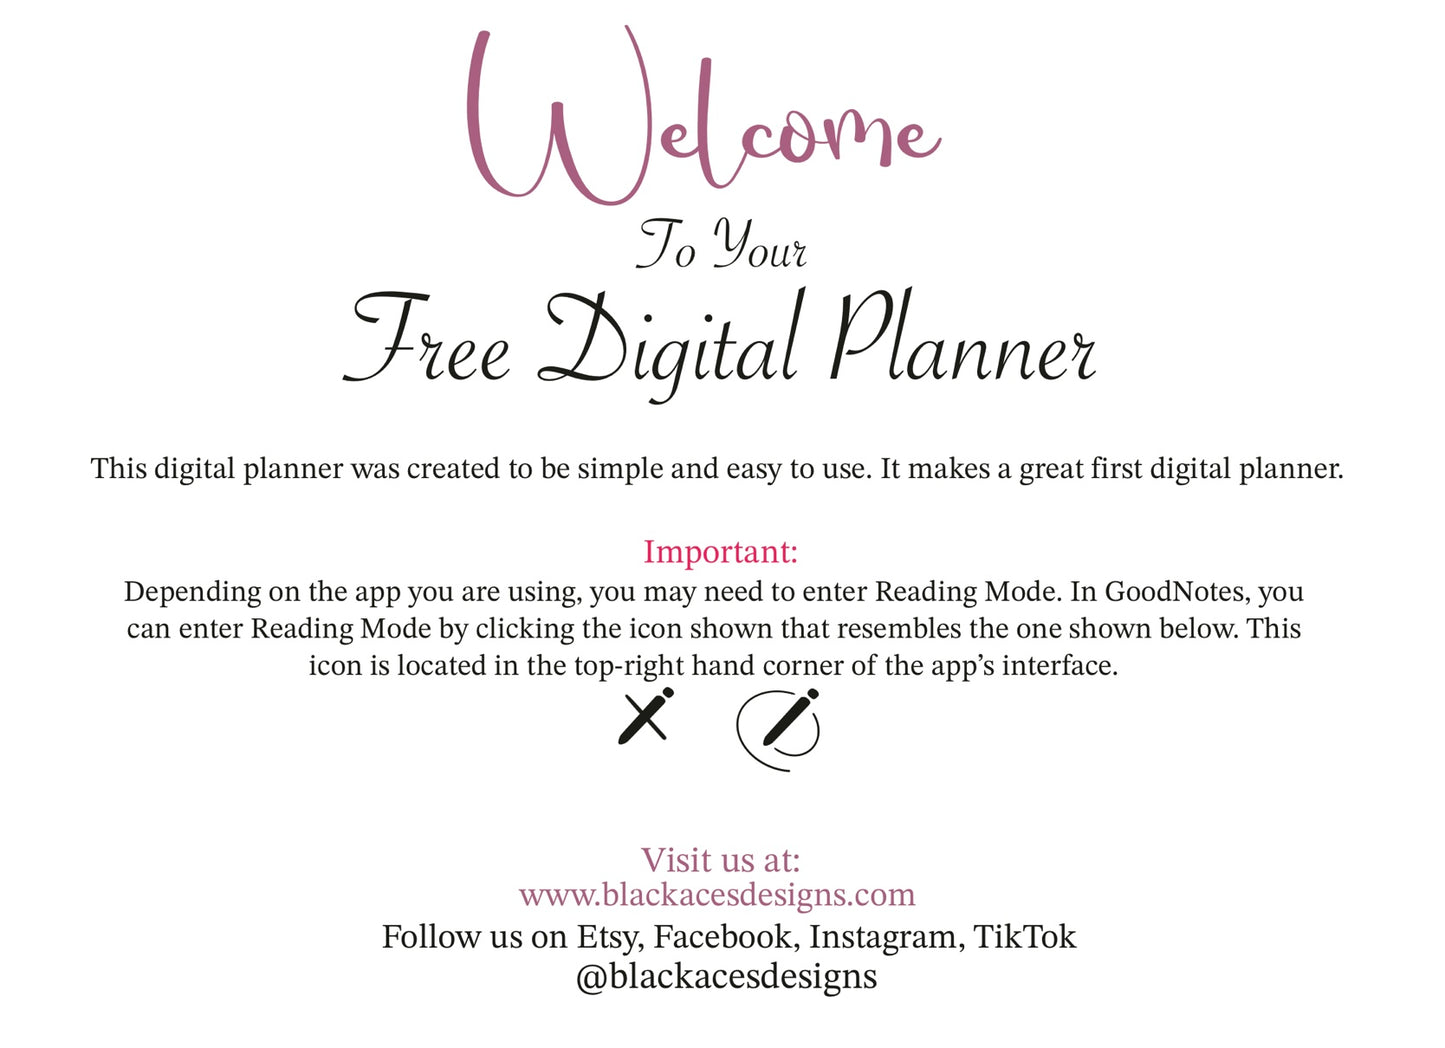 January Freebie: FREE Digital Planner